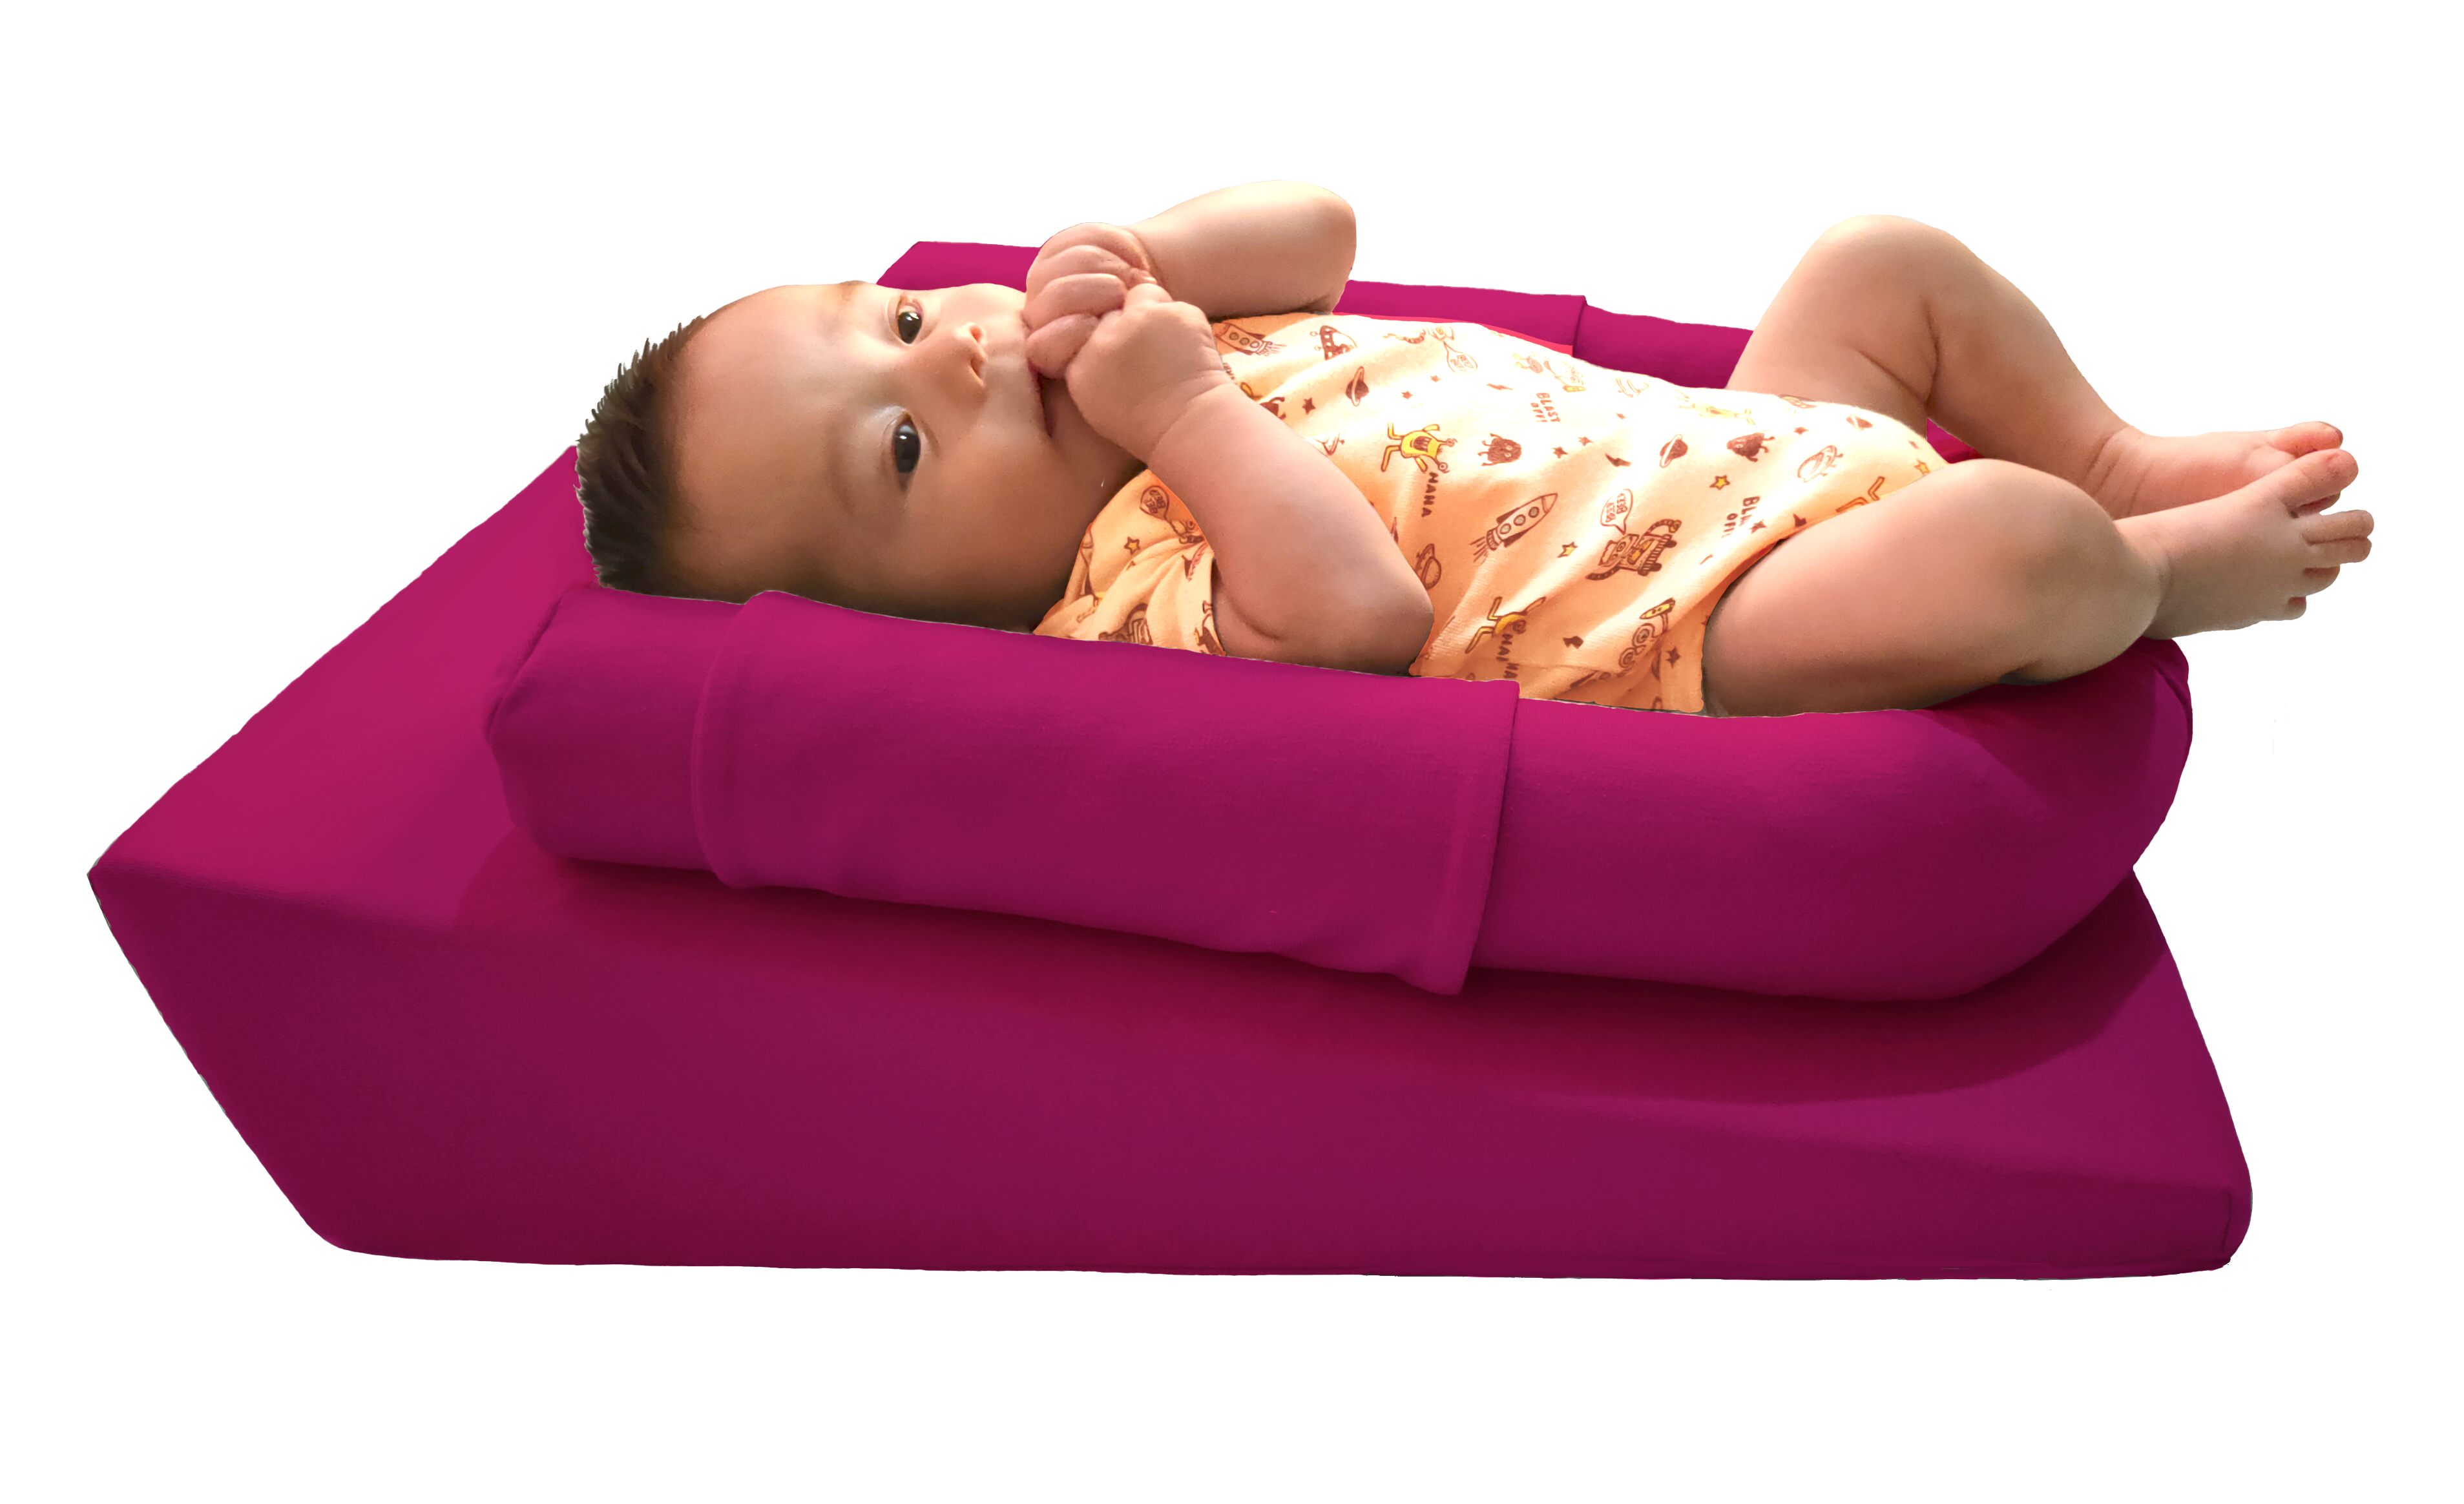 Cojín Antireflujo para bebe Rosa Cómodo Colchón Antirreflujo Bebe